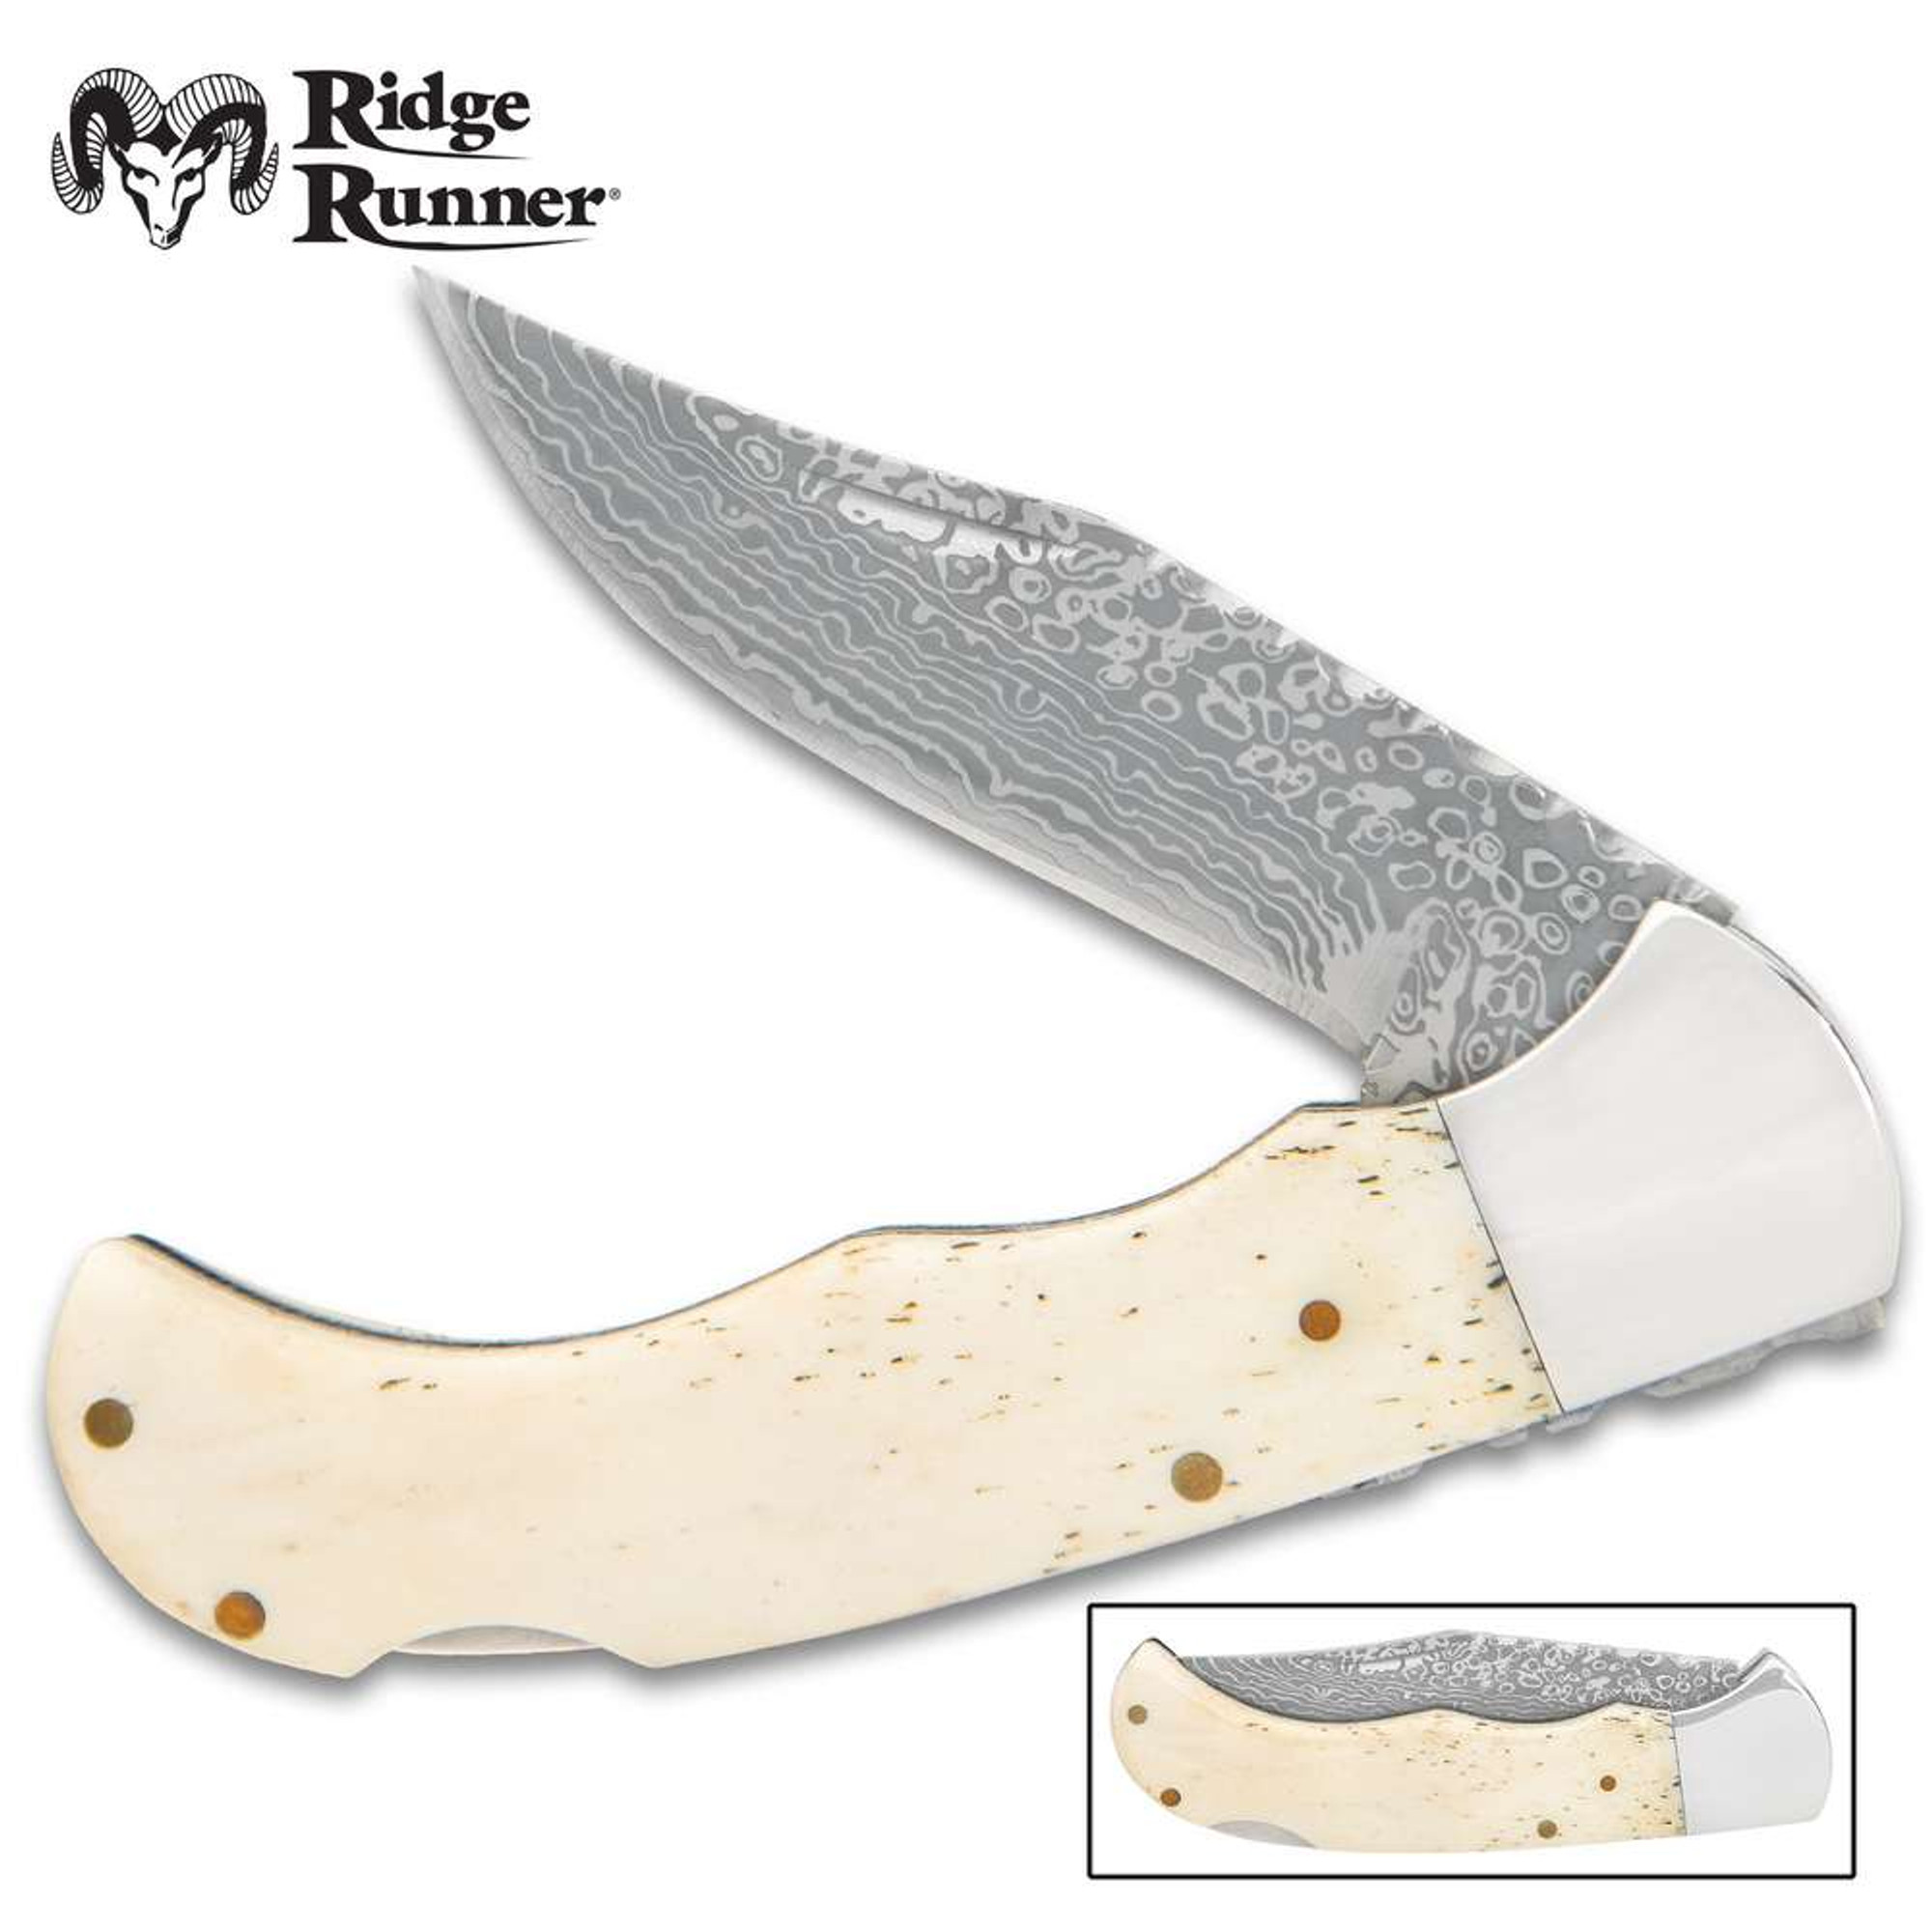 Ridge Runner Tundra Pocket Knife